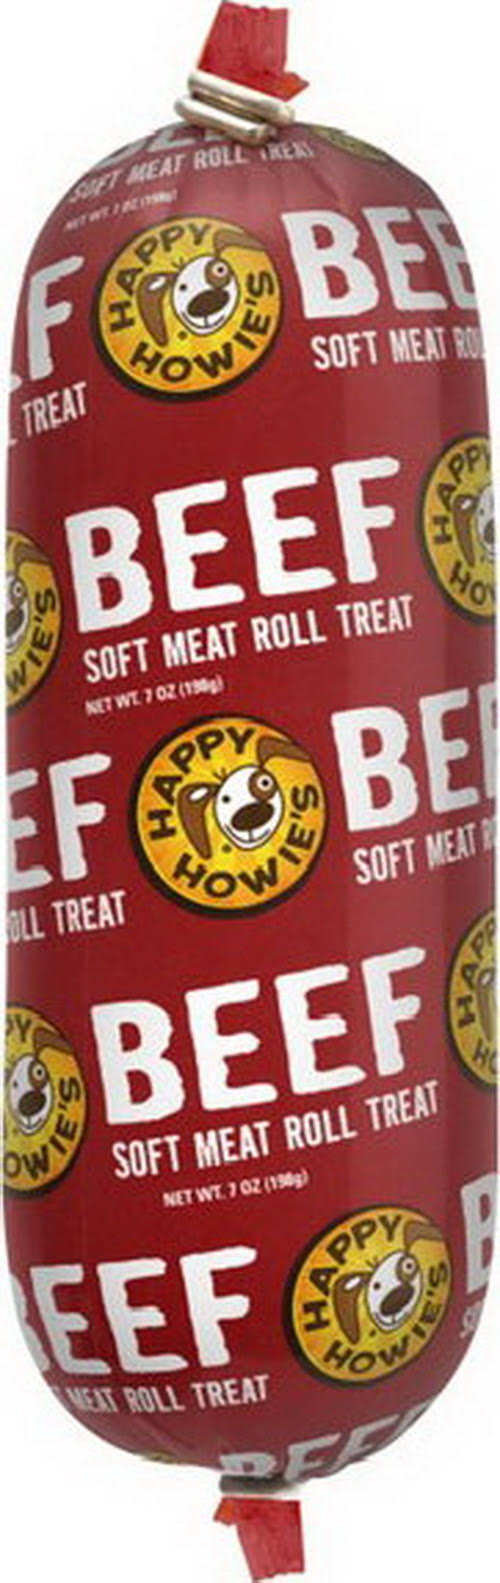 Happy howie's roll treat, beef, 7 oz